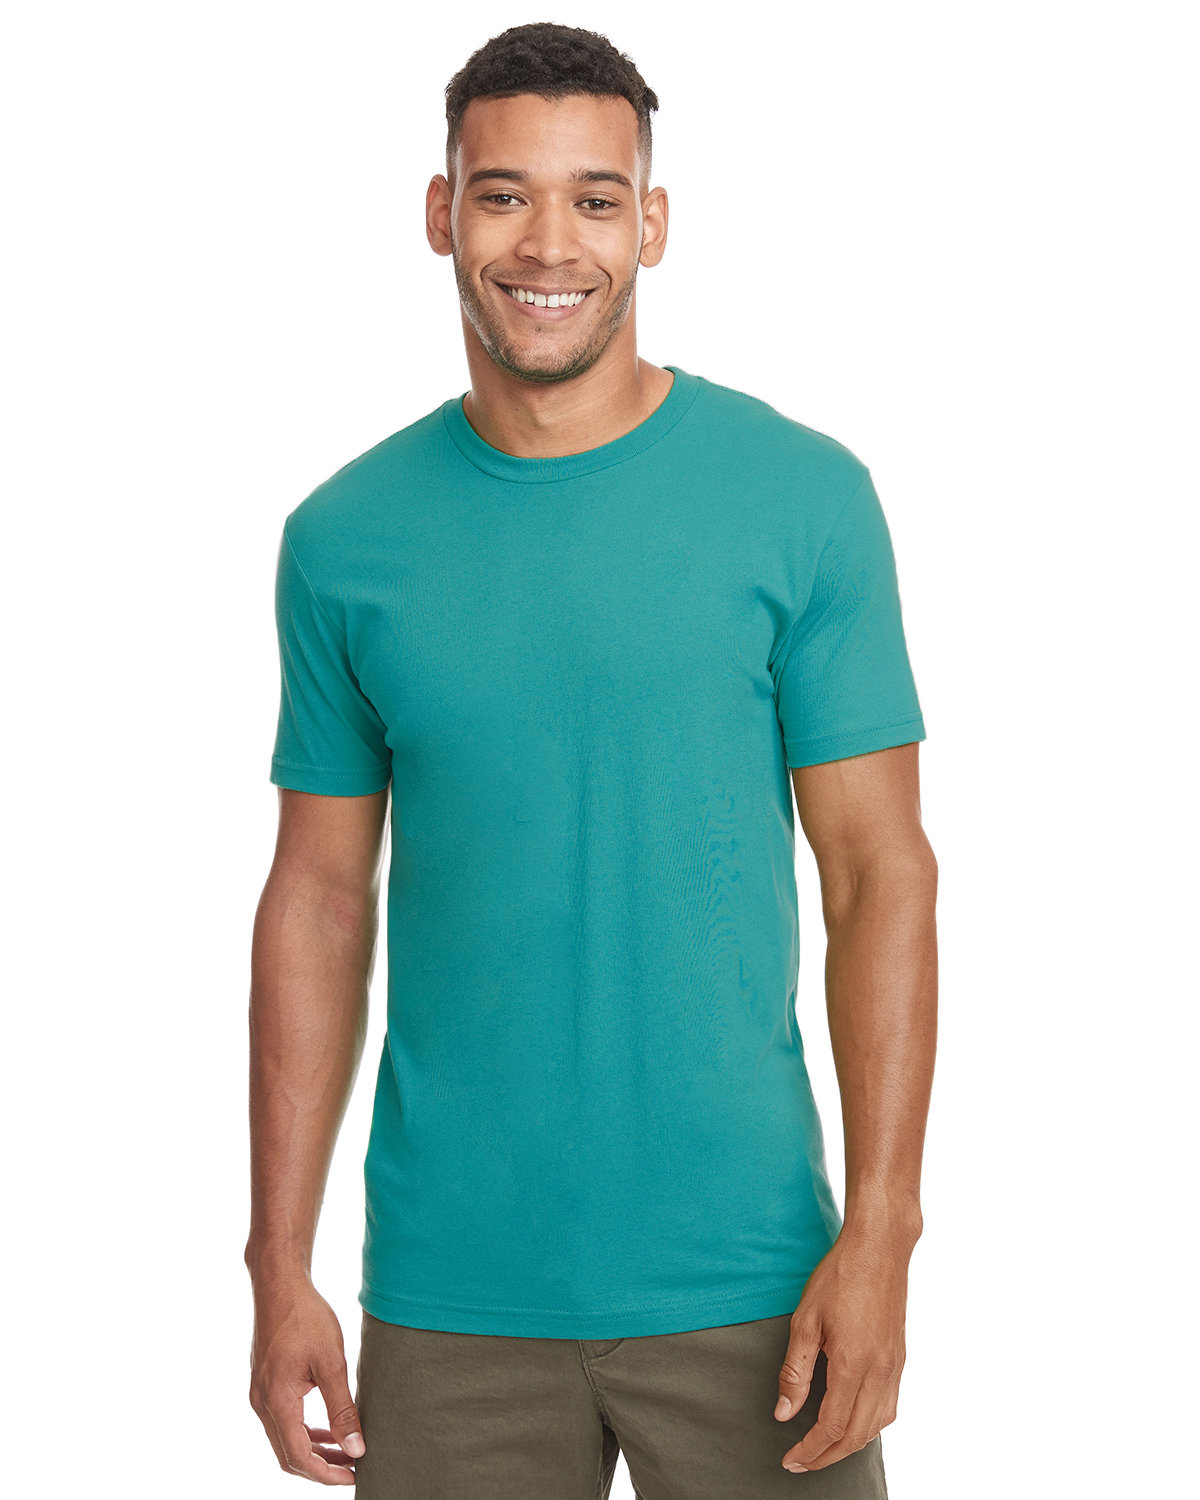 Next Level 3600 Unisex Cotton T Shirt - Teal - 2XL